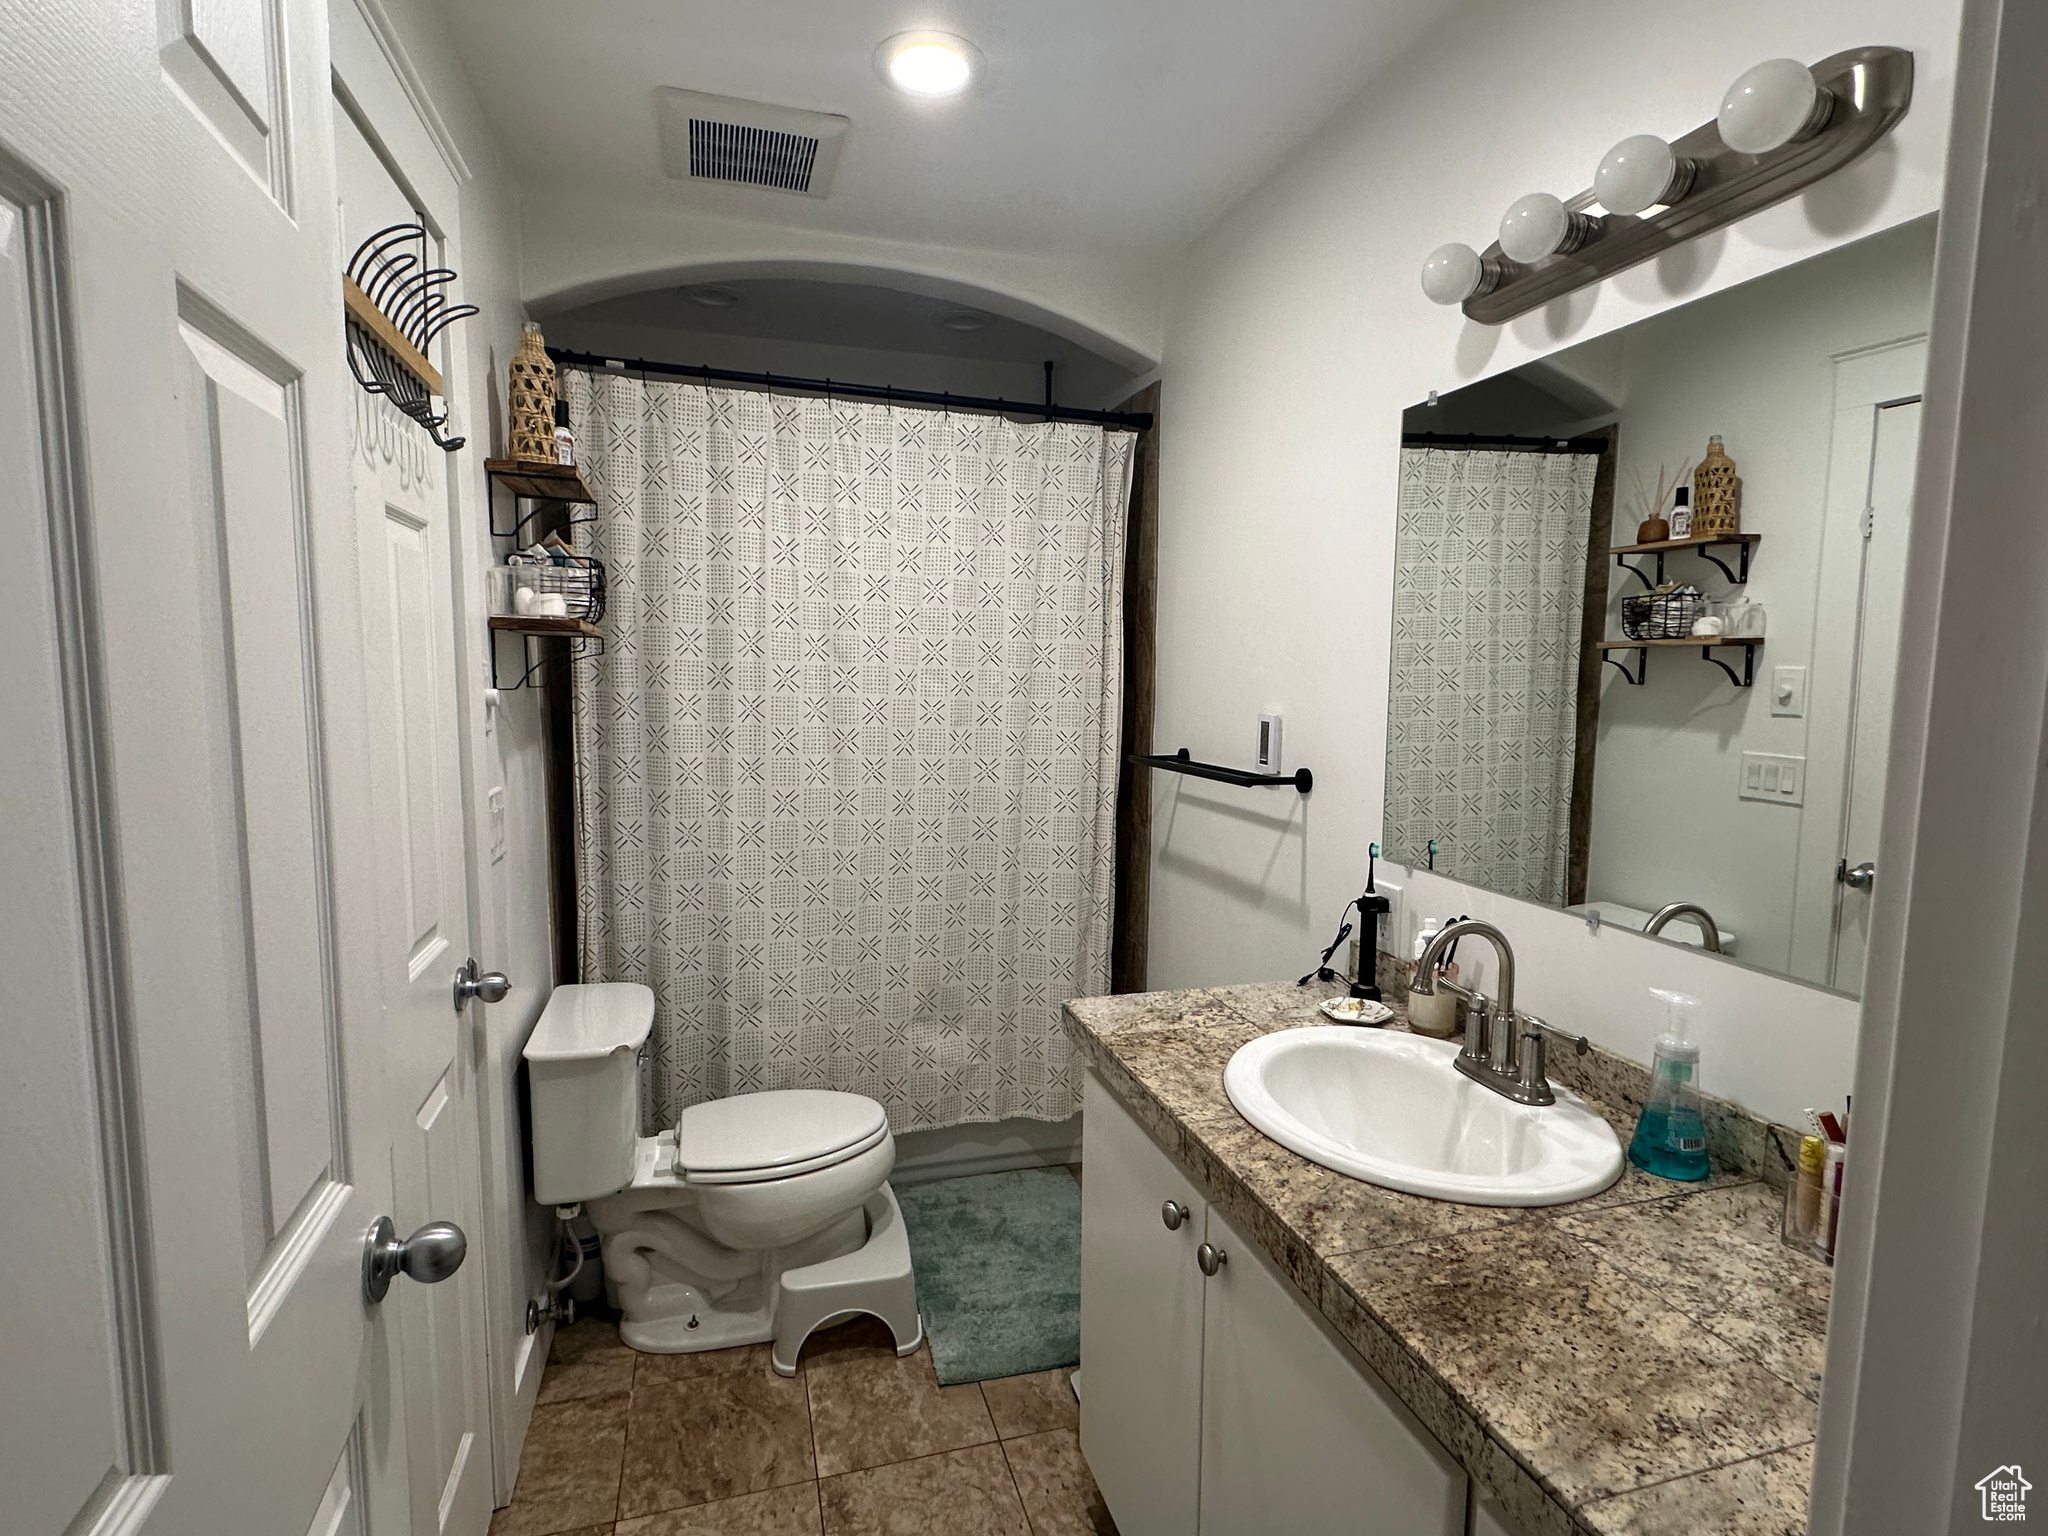 Bathroom featuring toilet, tile floors, and large vanity